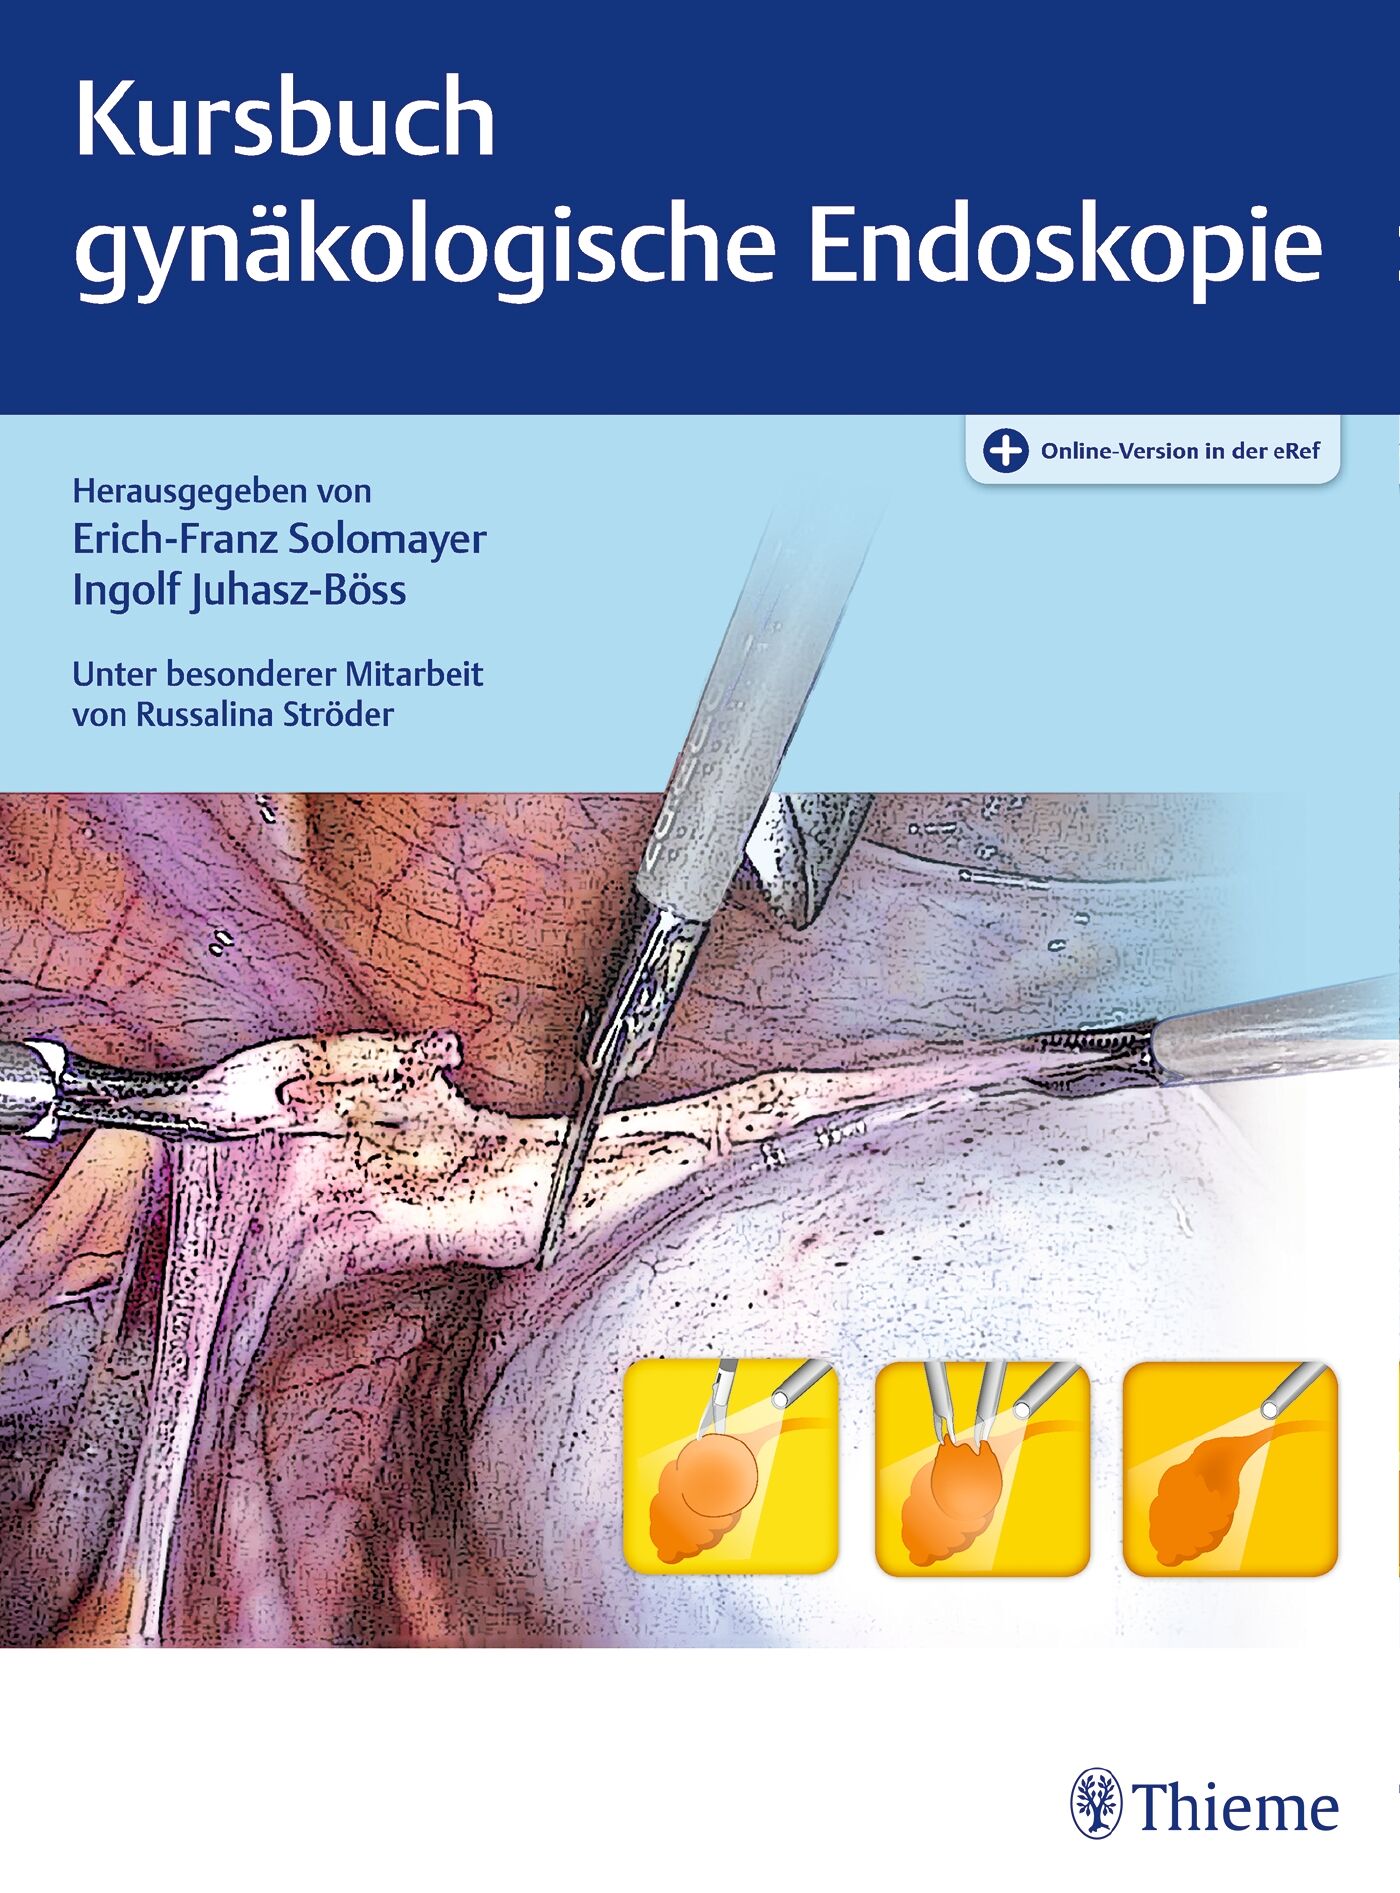 Kursbuch Gynäkologische Endoskopie, 9783132400054